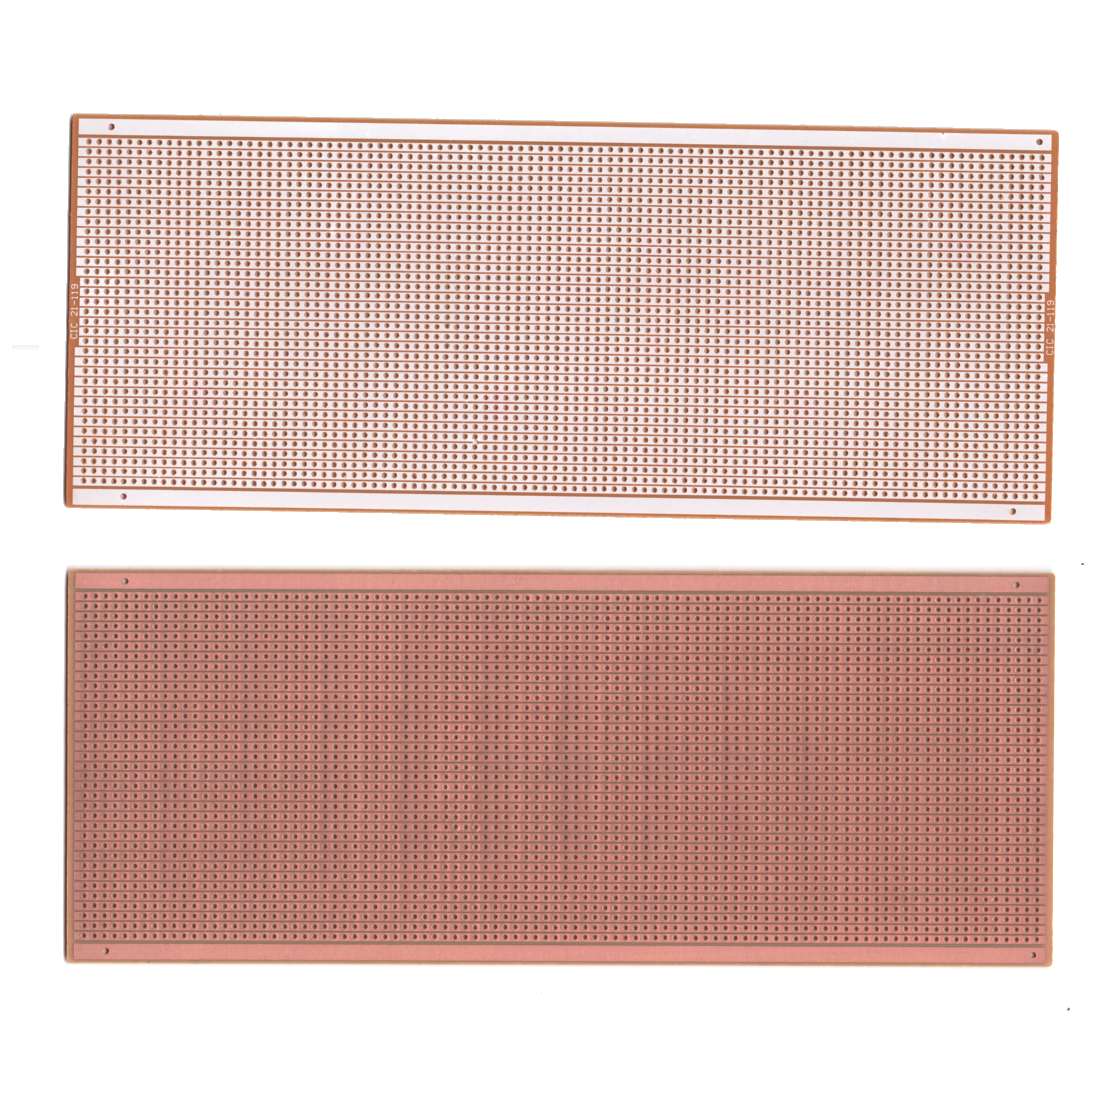 Copper stripboard 100 x 250mm 35 strip x 97 hole prototype vero board